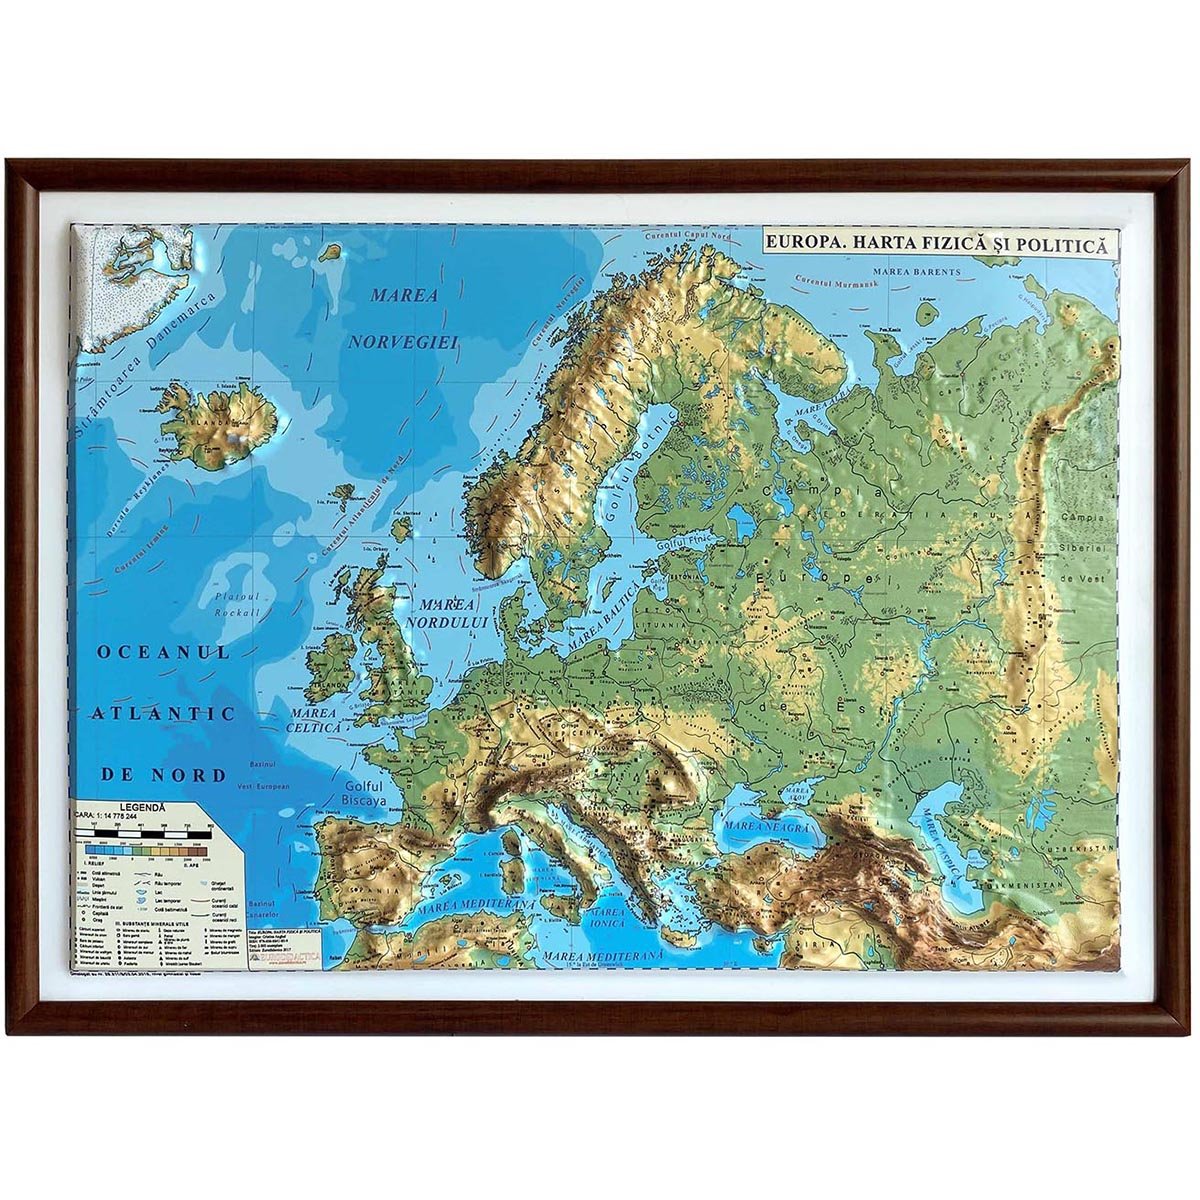 Harta fizica si politica a Europei Eurodidactica 3D Eurodidactica